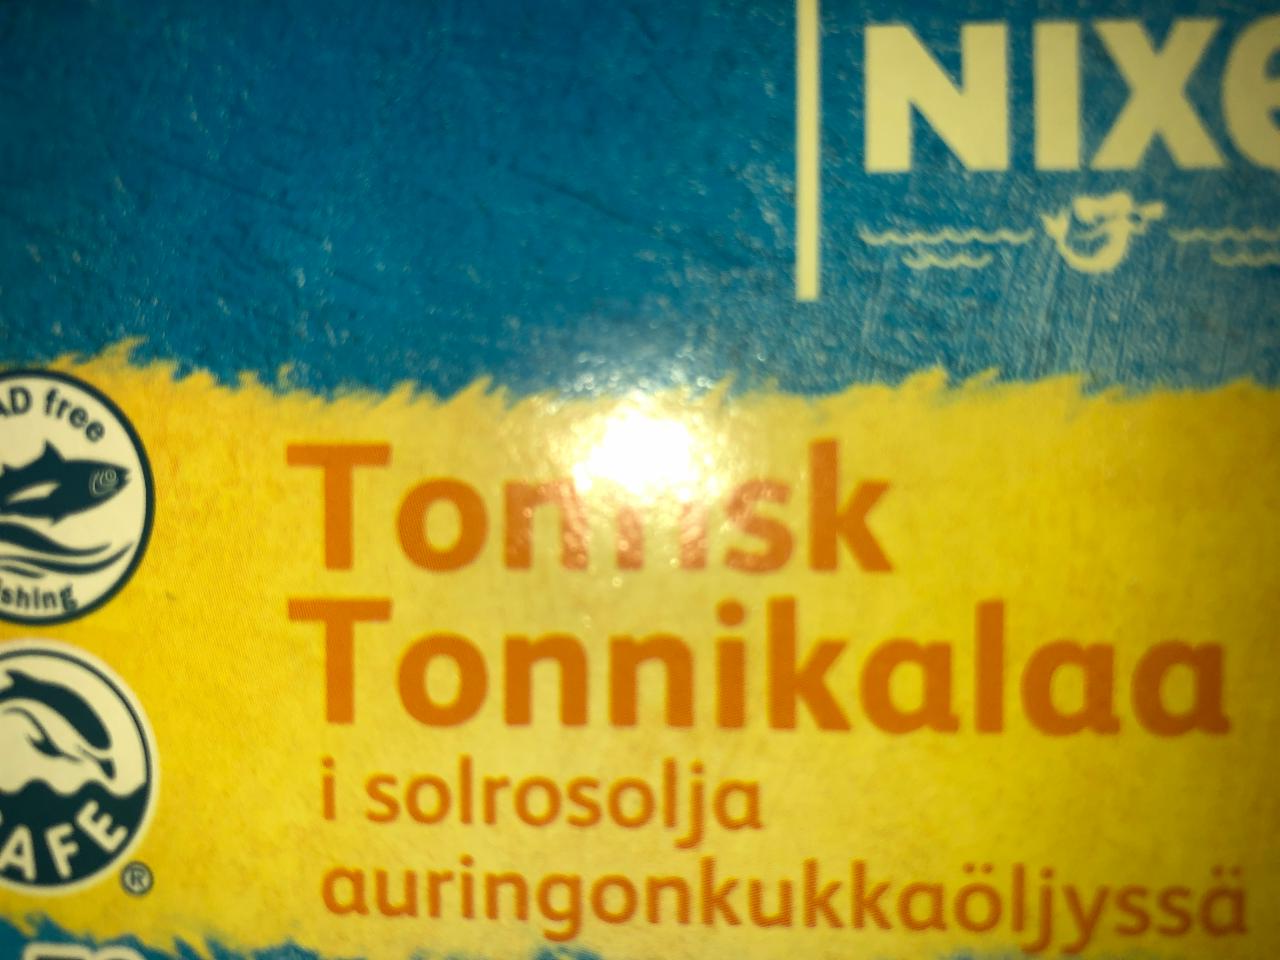 Fotografie - Tonfisk i solrosolja Nixe